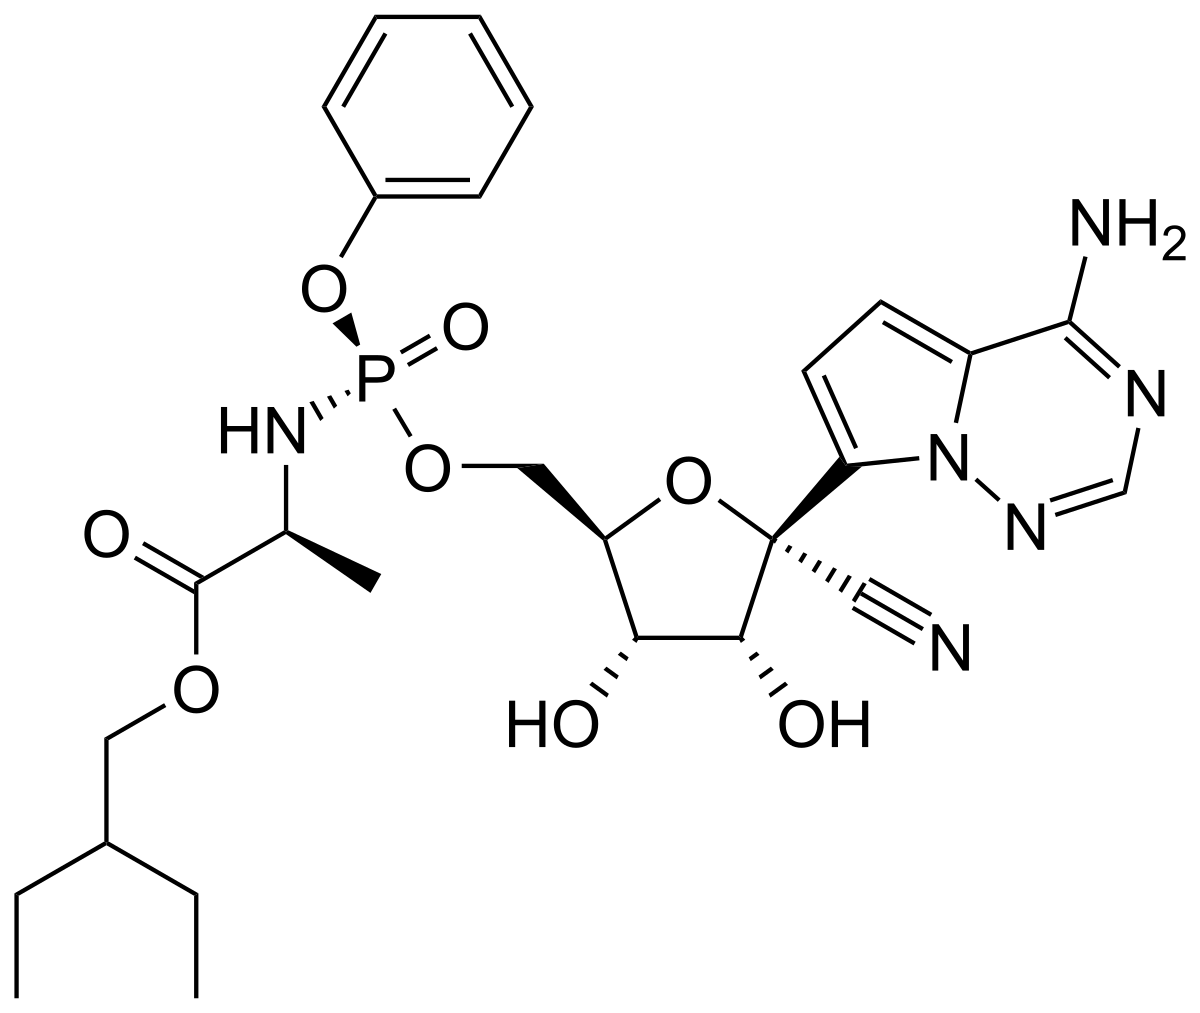 Figura 3. Estructura química del Remdesivir. Tomada de https://es.wikipedia.org/wiki/Remdesivir